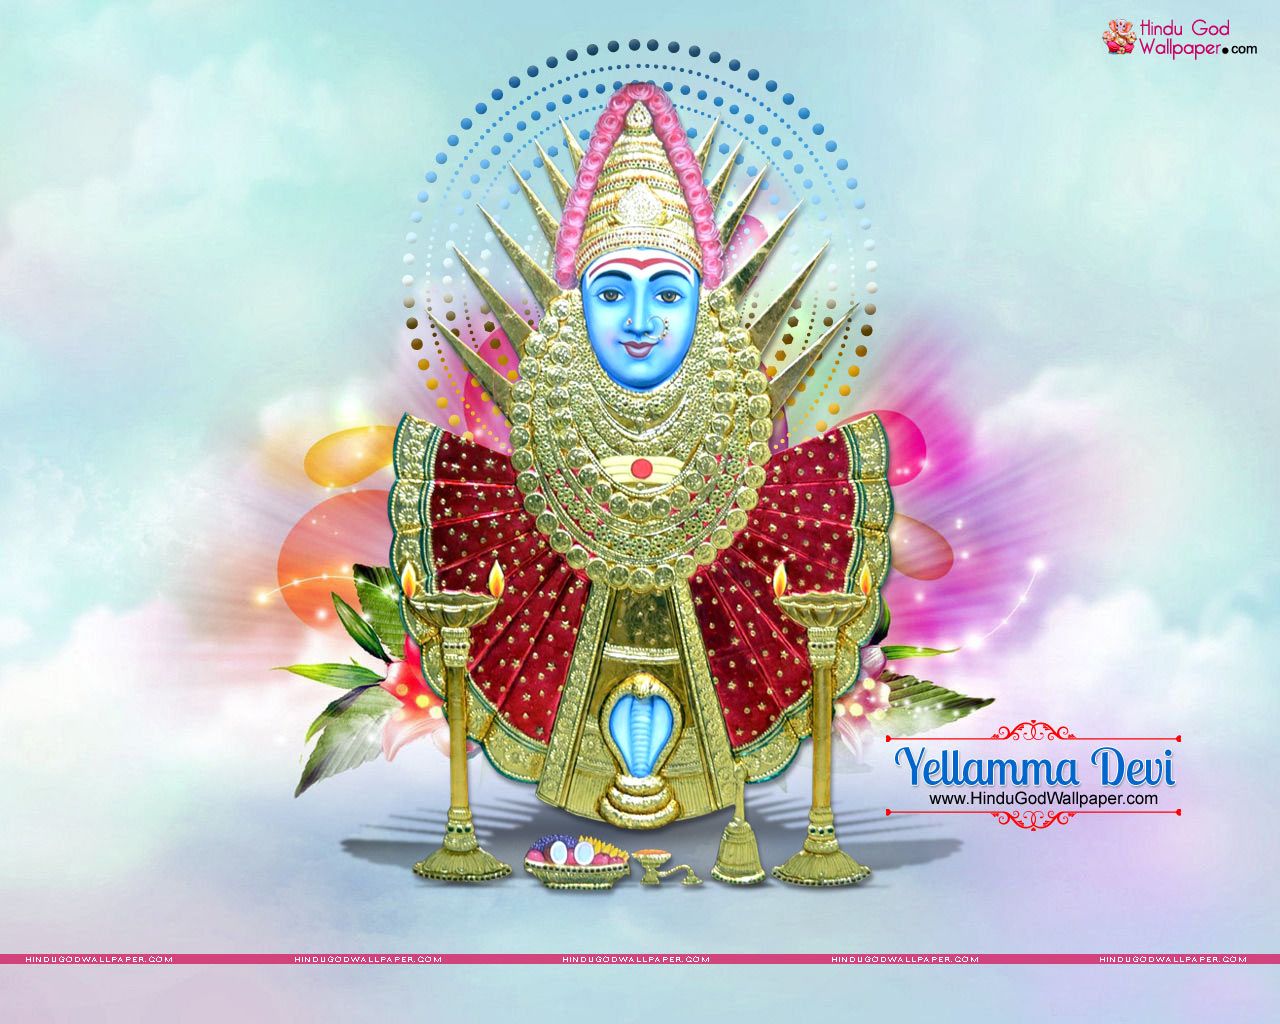 Yellamma Devi - 1280x1024 Wallpaper 